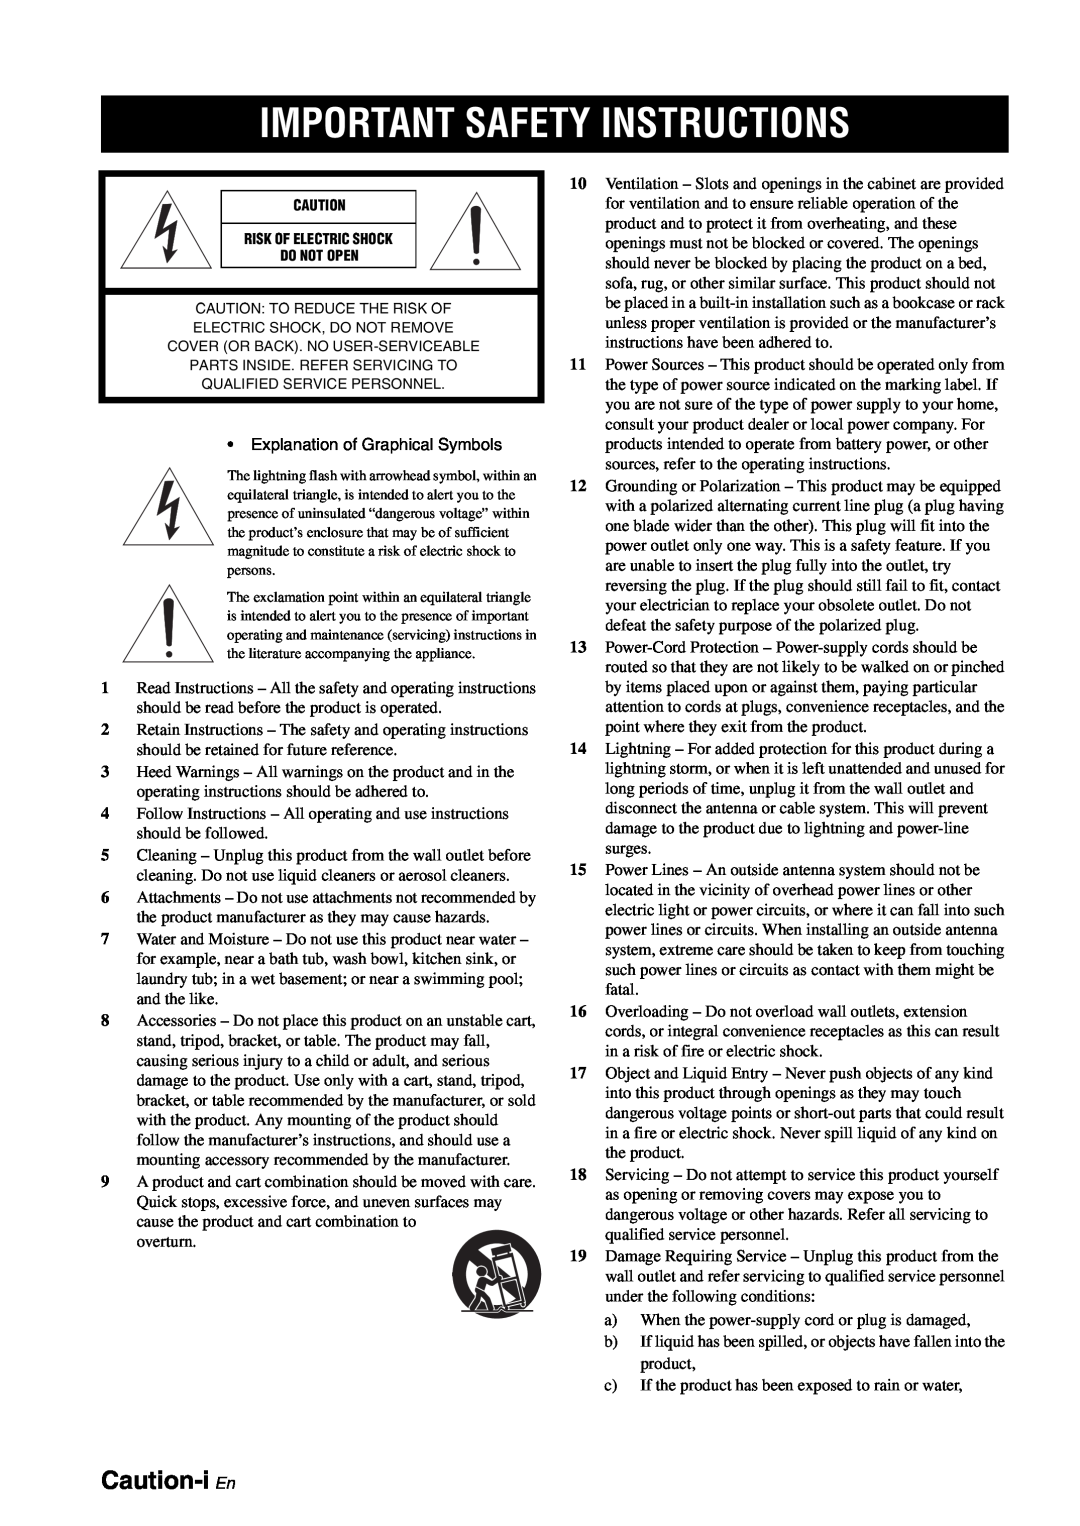 Yamaha RX-V863 owner manual Caution-i En, Important Safety Instructions 